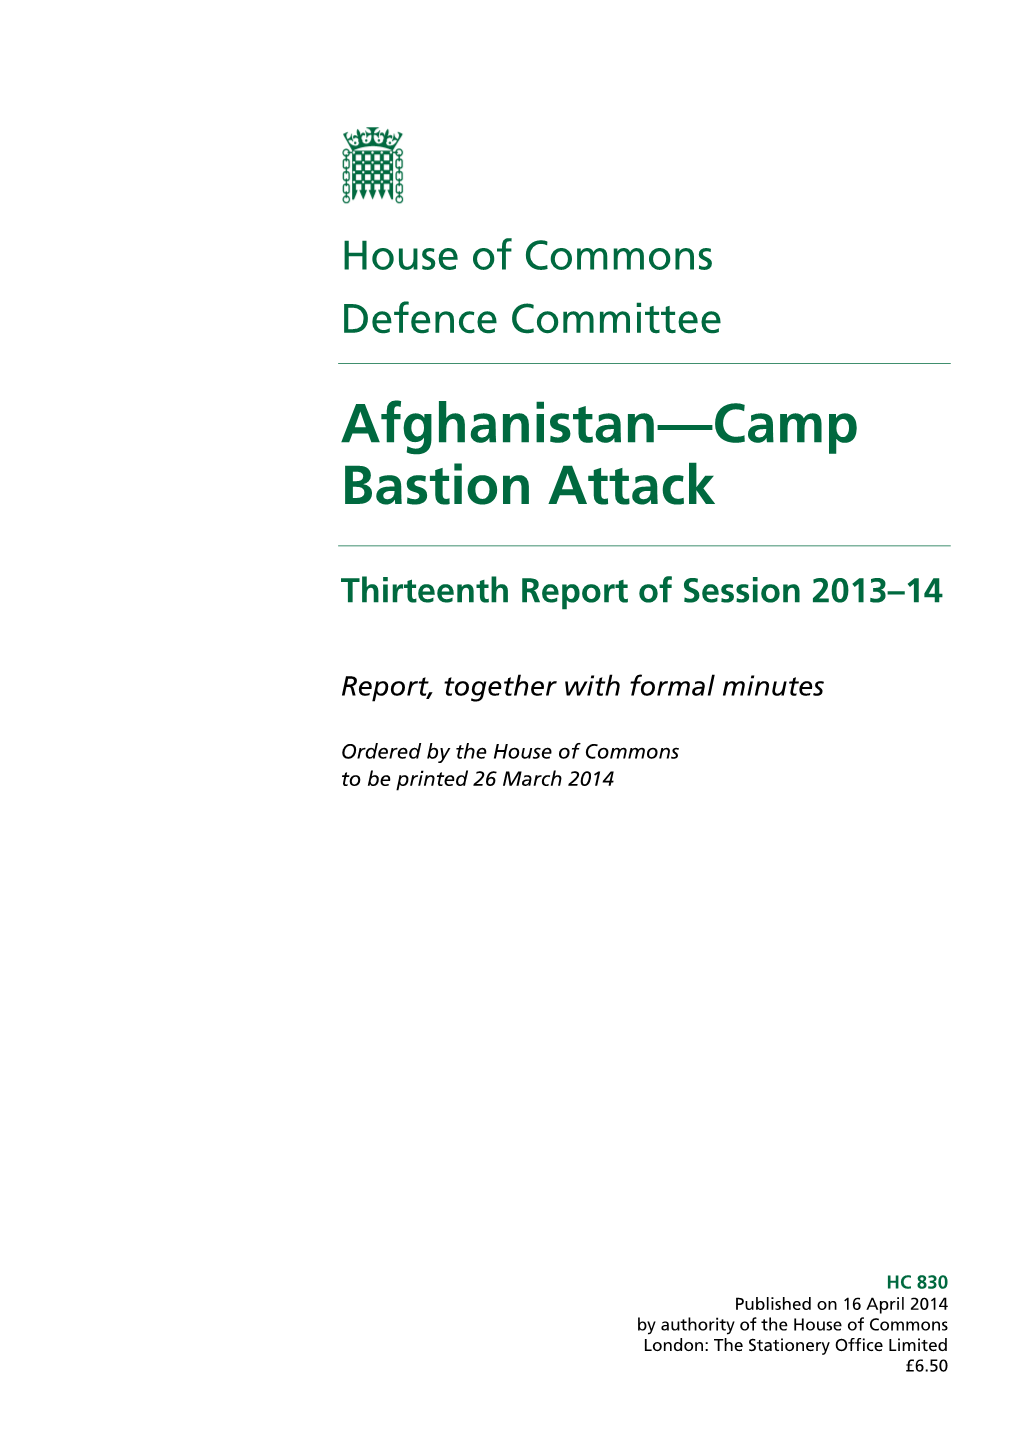 Afghanistan—Camp Bastion Attack